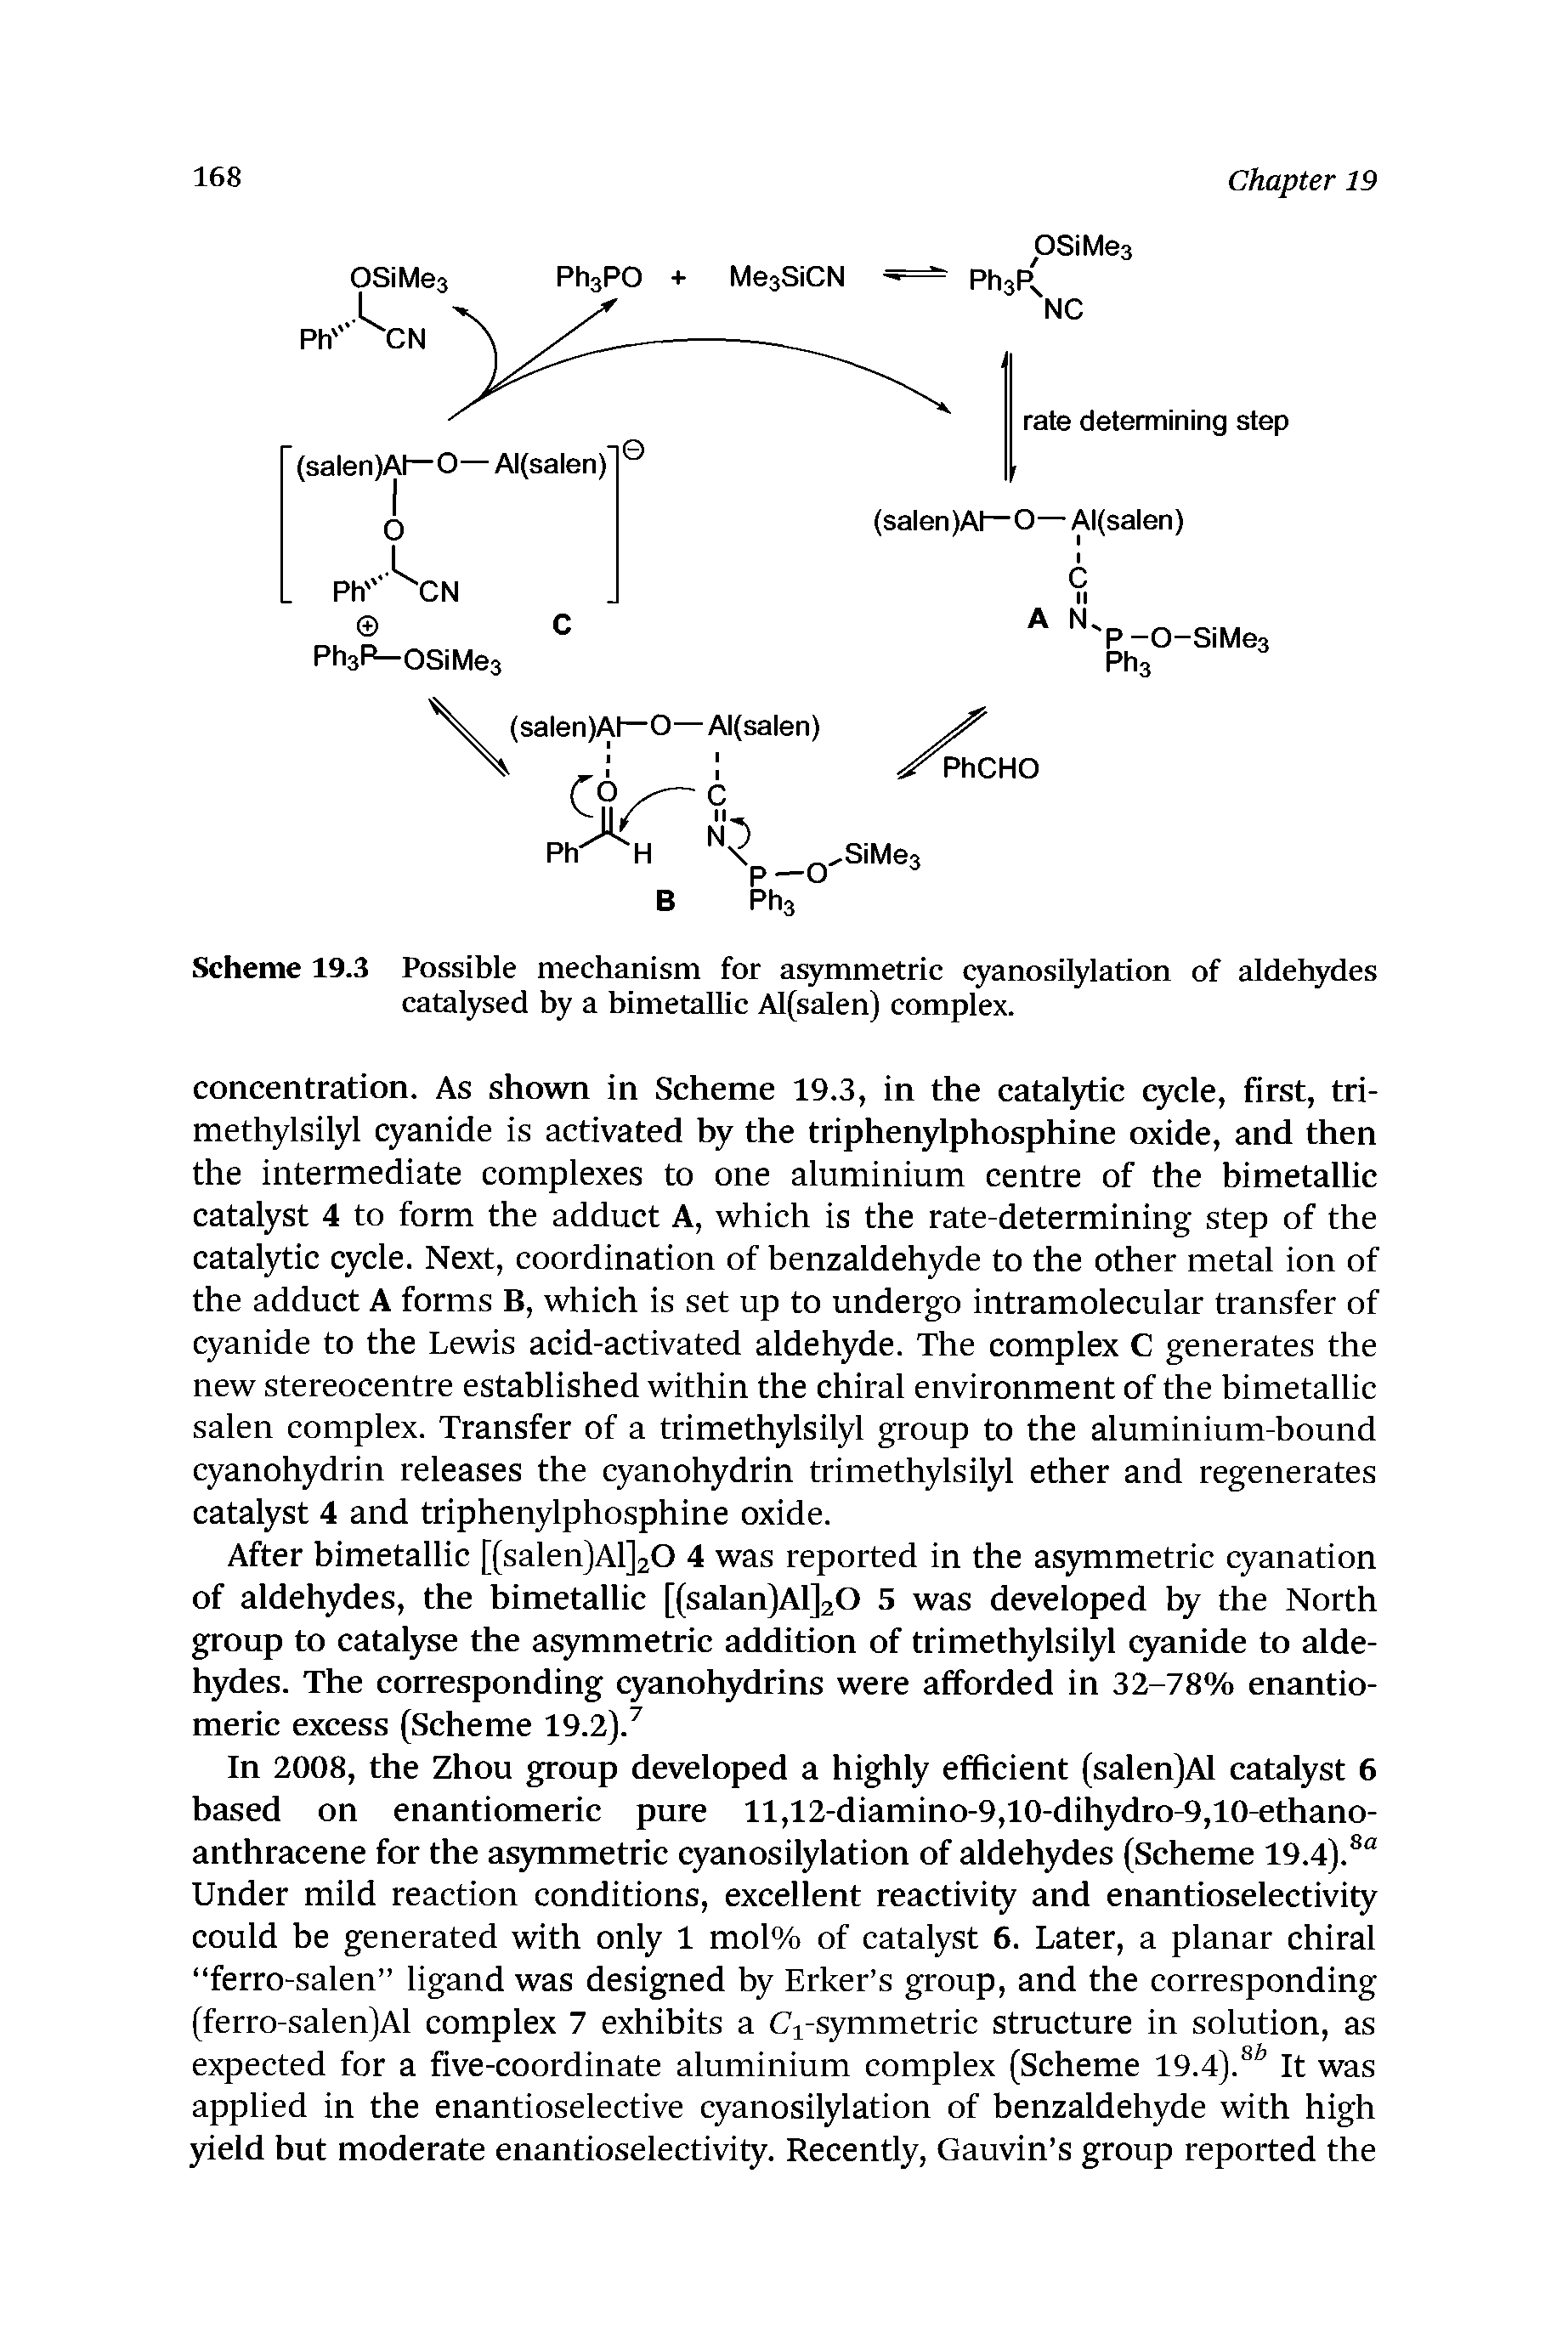 Scheme 19.3 Possible mechanism for asymmetric cyanosilylation of aldehydes catalysed by a bimetallic Al(salen) complex.